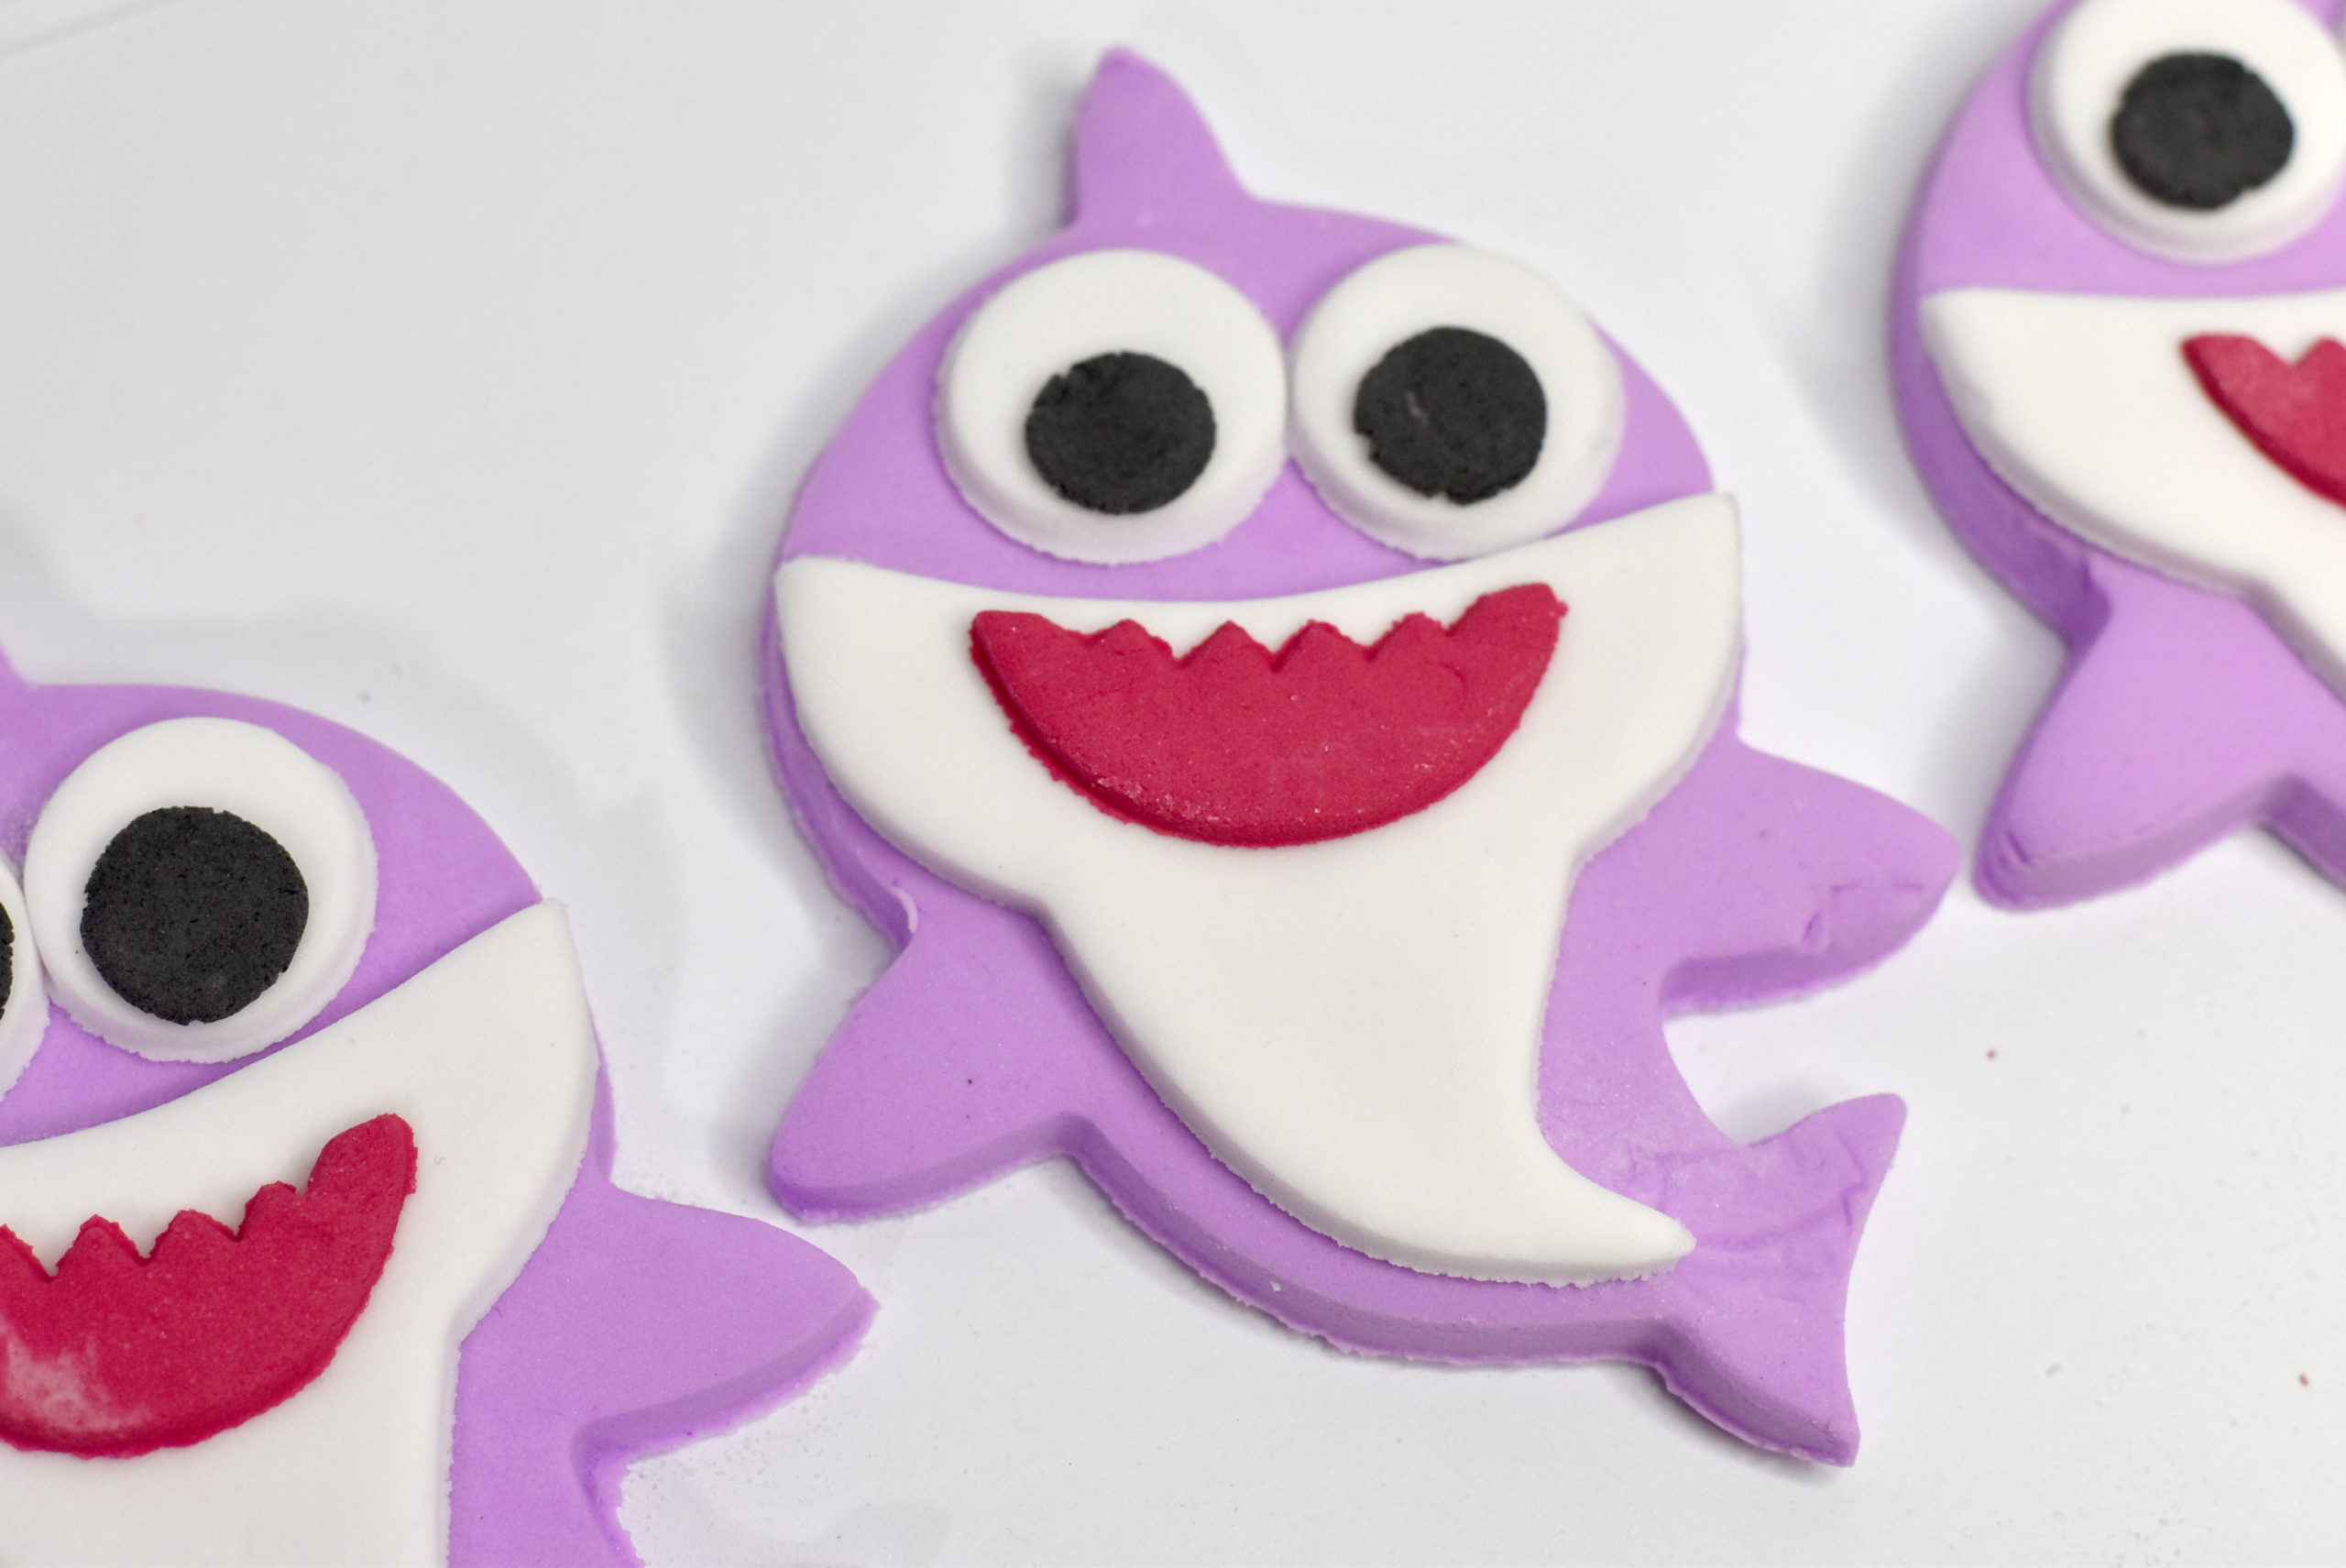 Baby Shark -Doo Doo Doo Doo – Bubble Bars Using a Play-Doh Set